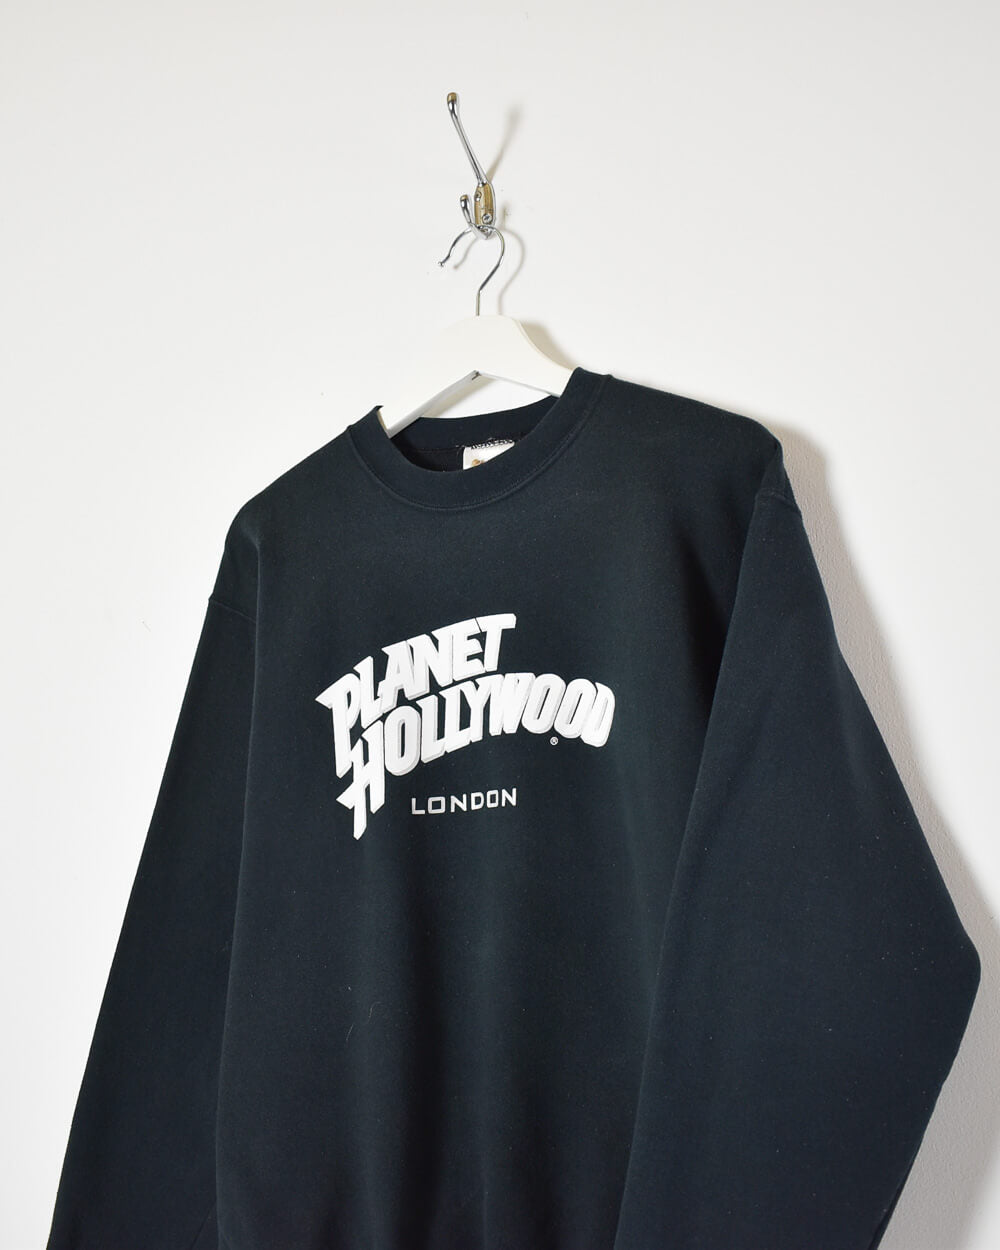 Black Hanes Planet Hollywood London Sweatshirt - Small